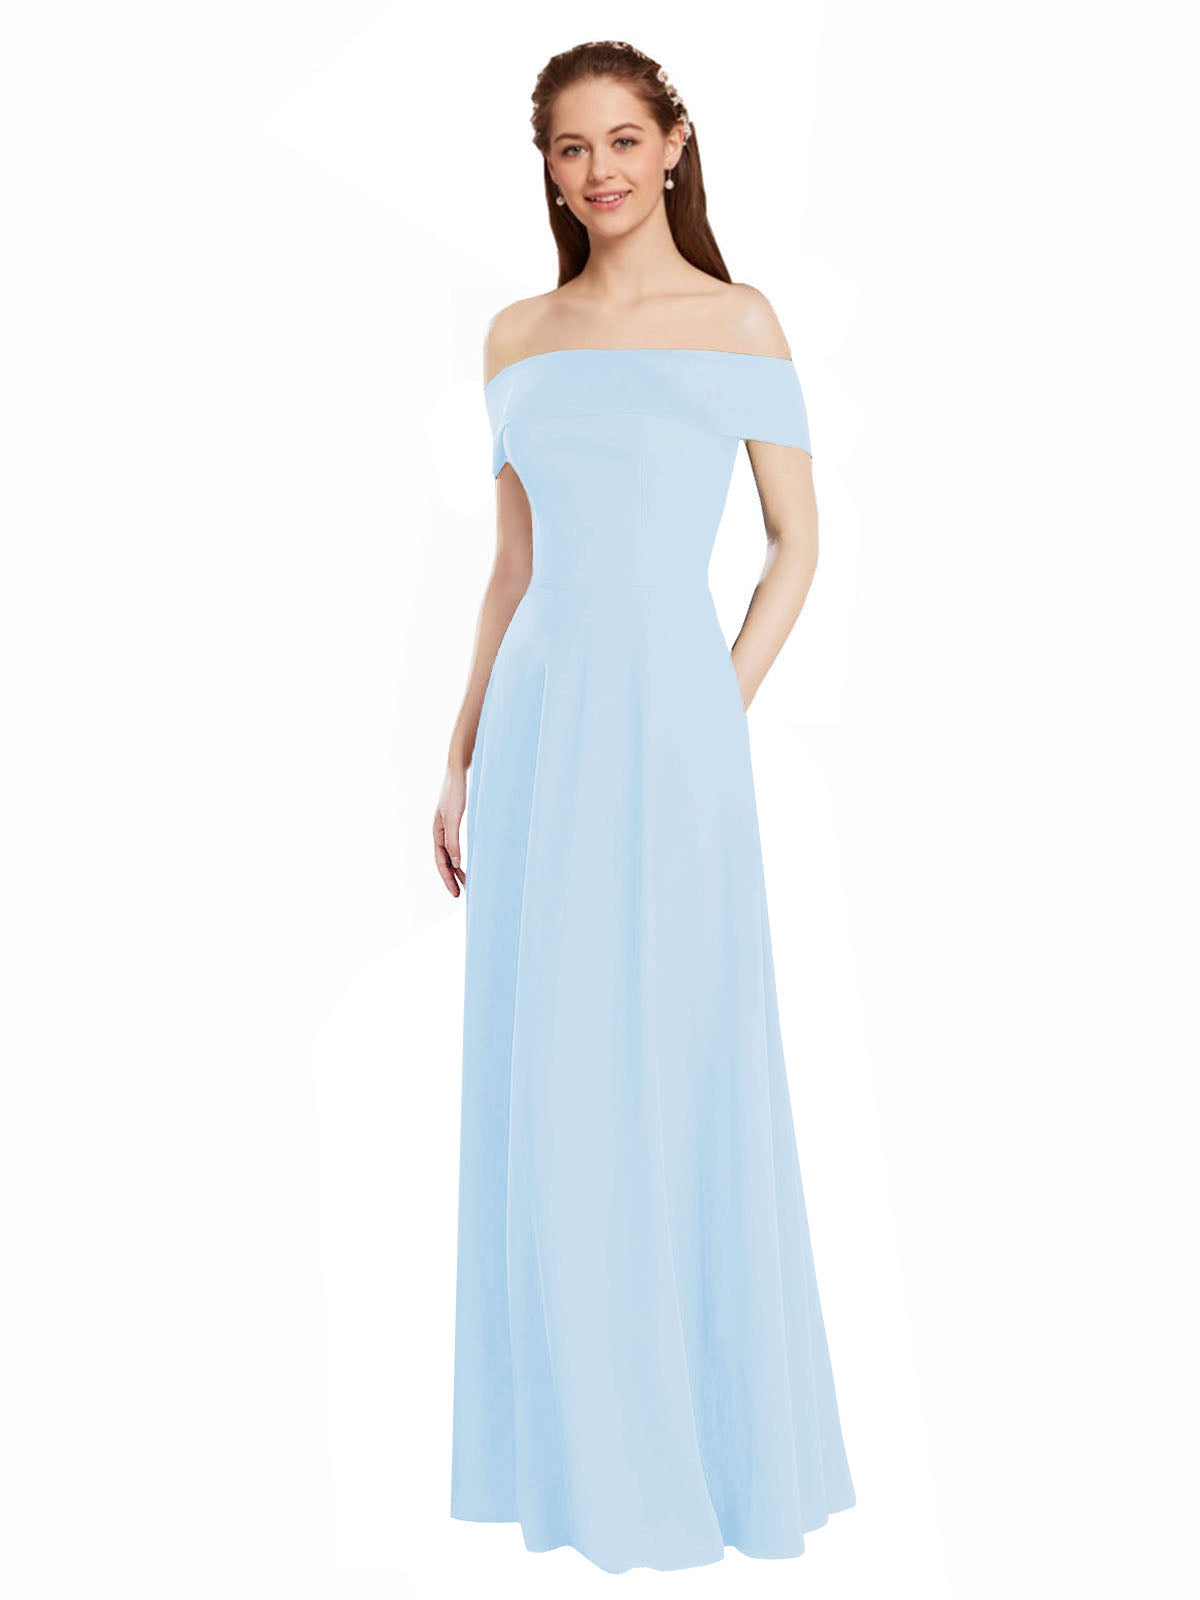 Light Sky Blue A-Line Off the Shoulder Cap Sleeves Long Bridesmaid Dress Lina